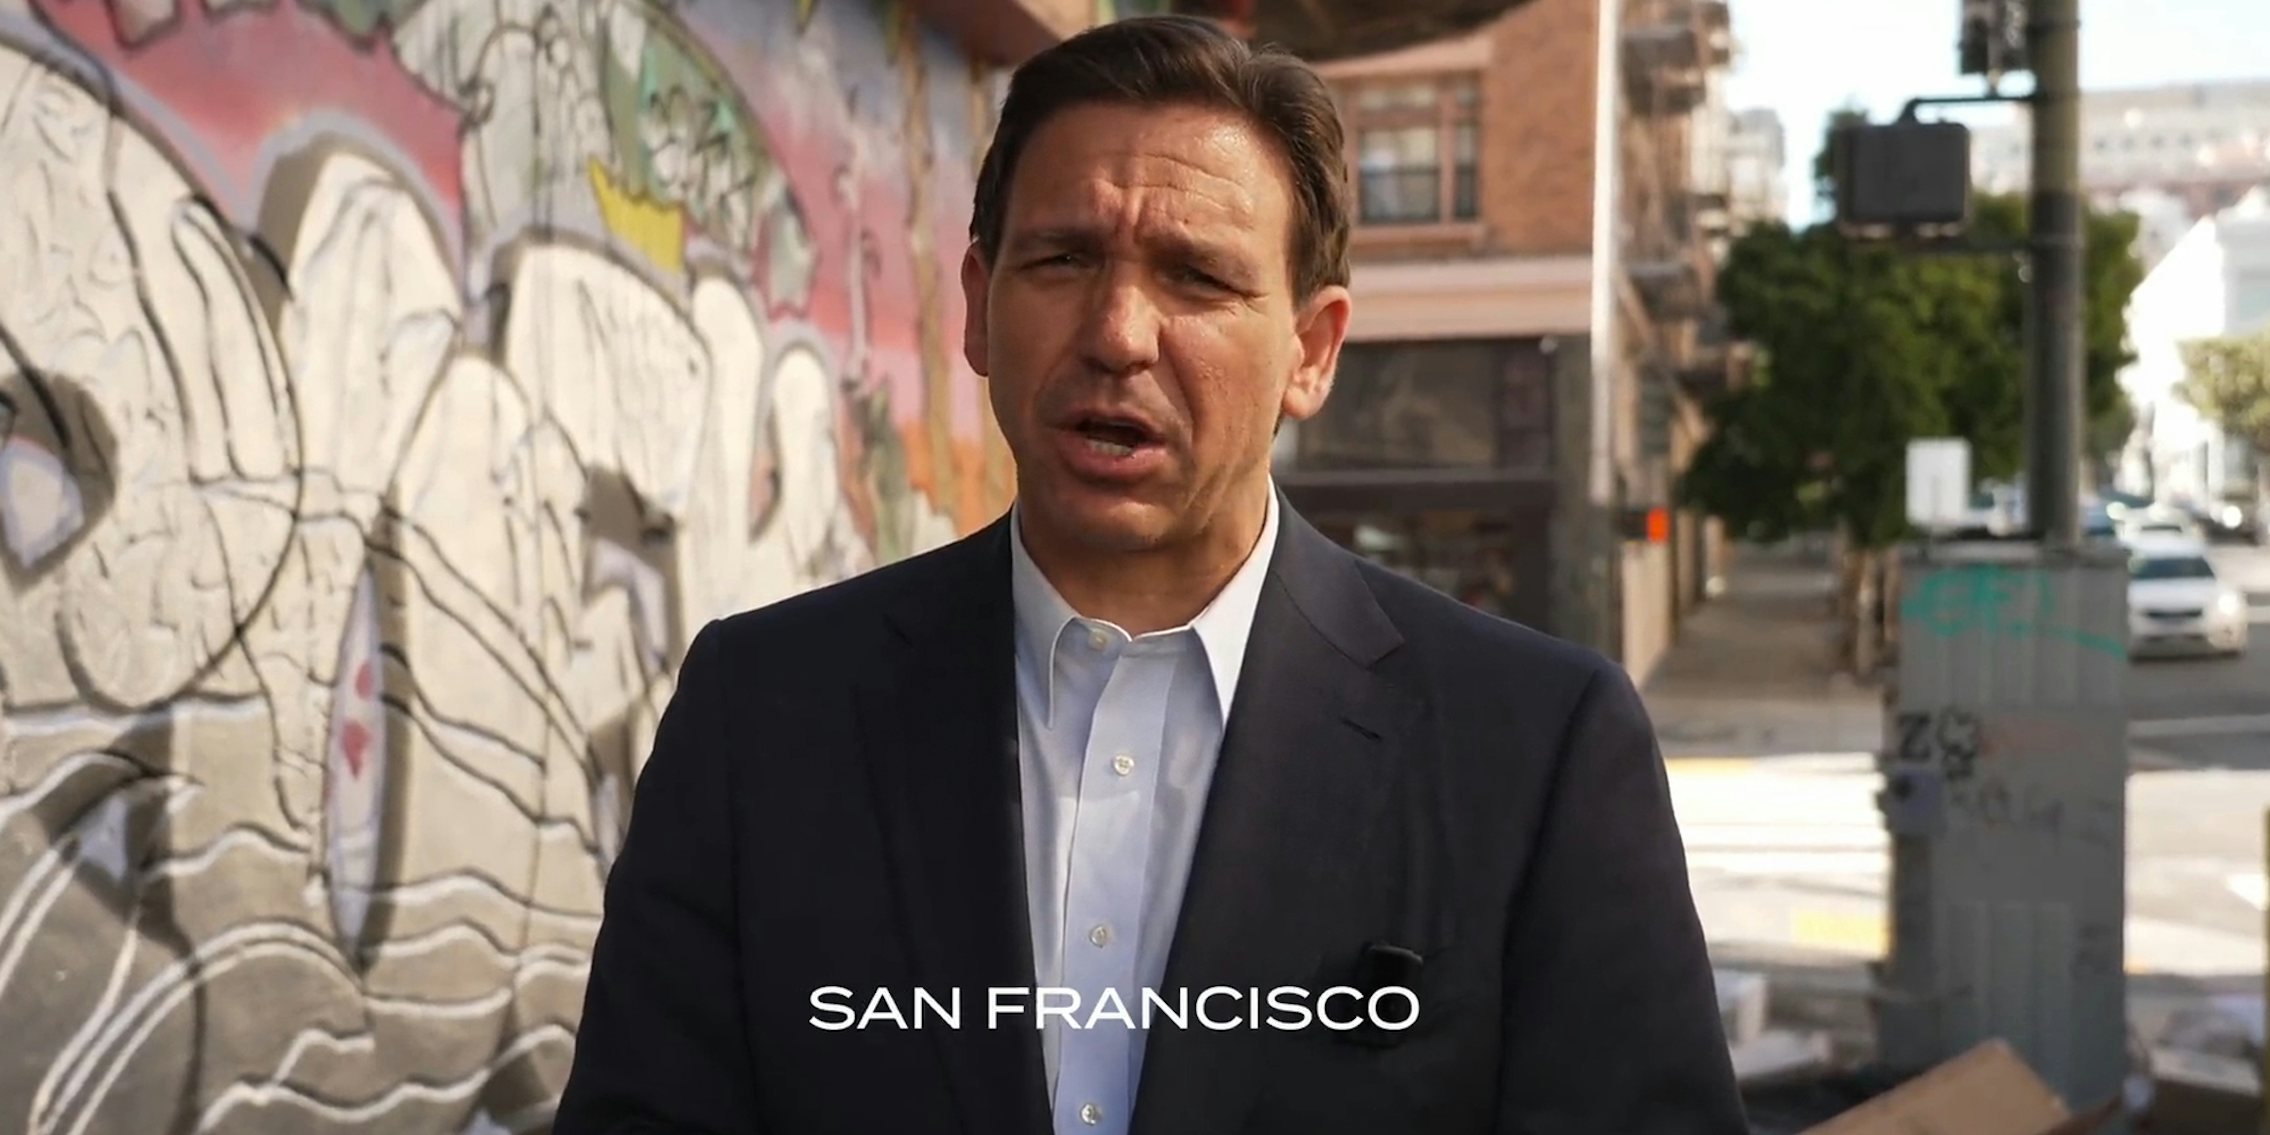 Ron DeSantis speaking on sidewalk in town with caption 'San Francisco'